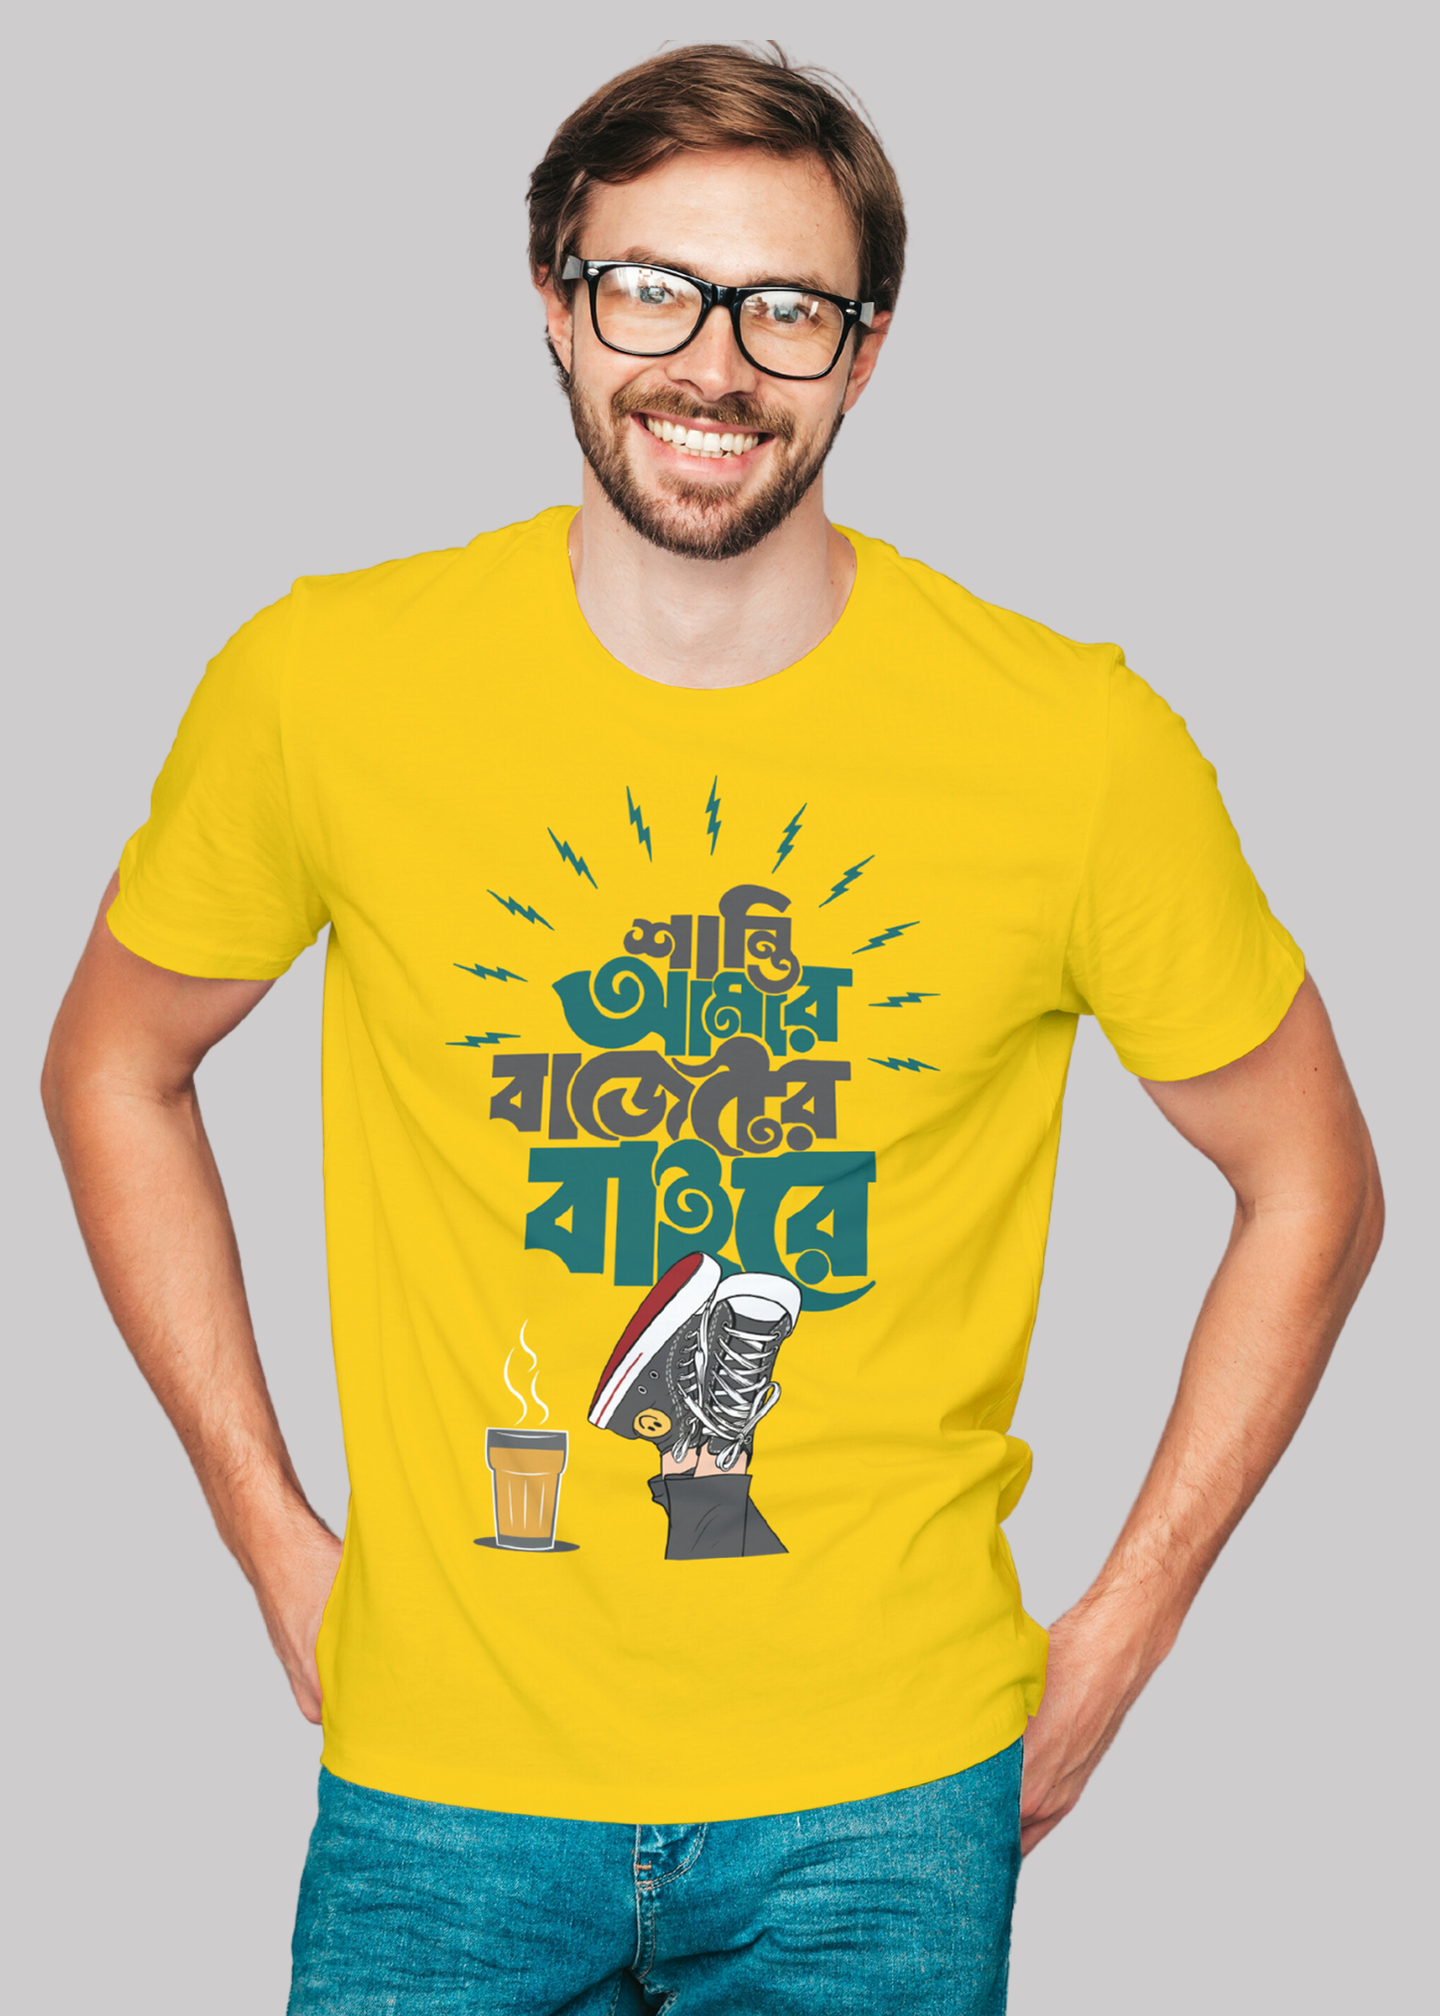 Shanti amar budget er baire  Printed Half Sleeve Premium Cotton T-shirt For Men